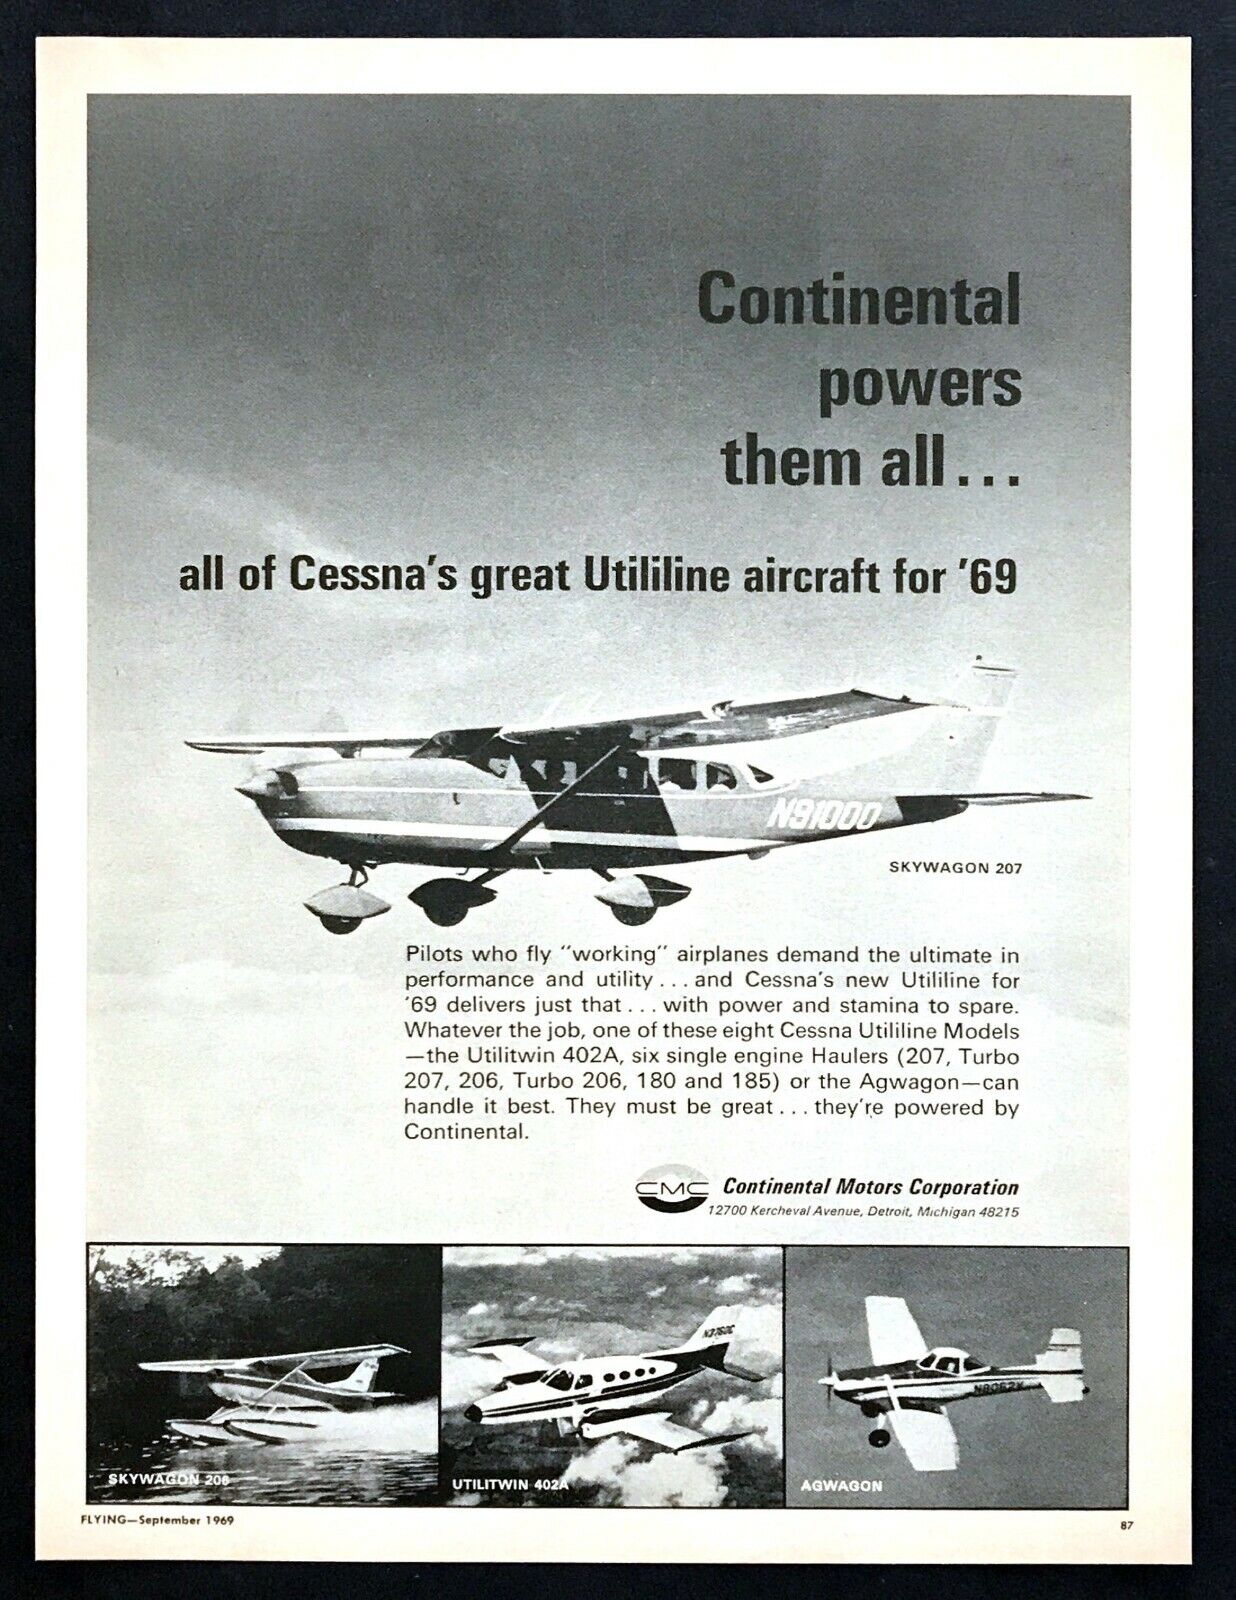 1969 Cessna Utililine Skywagon 207 Airplane photo Continental Motors print ad